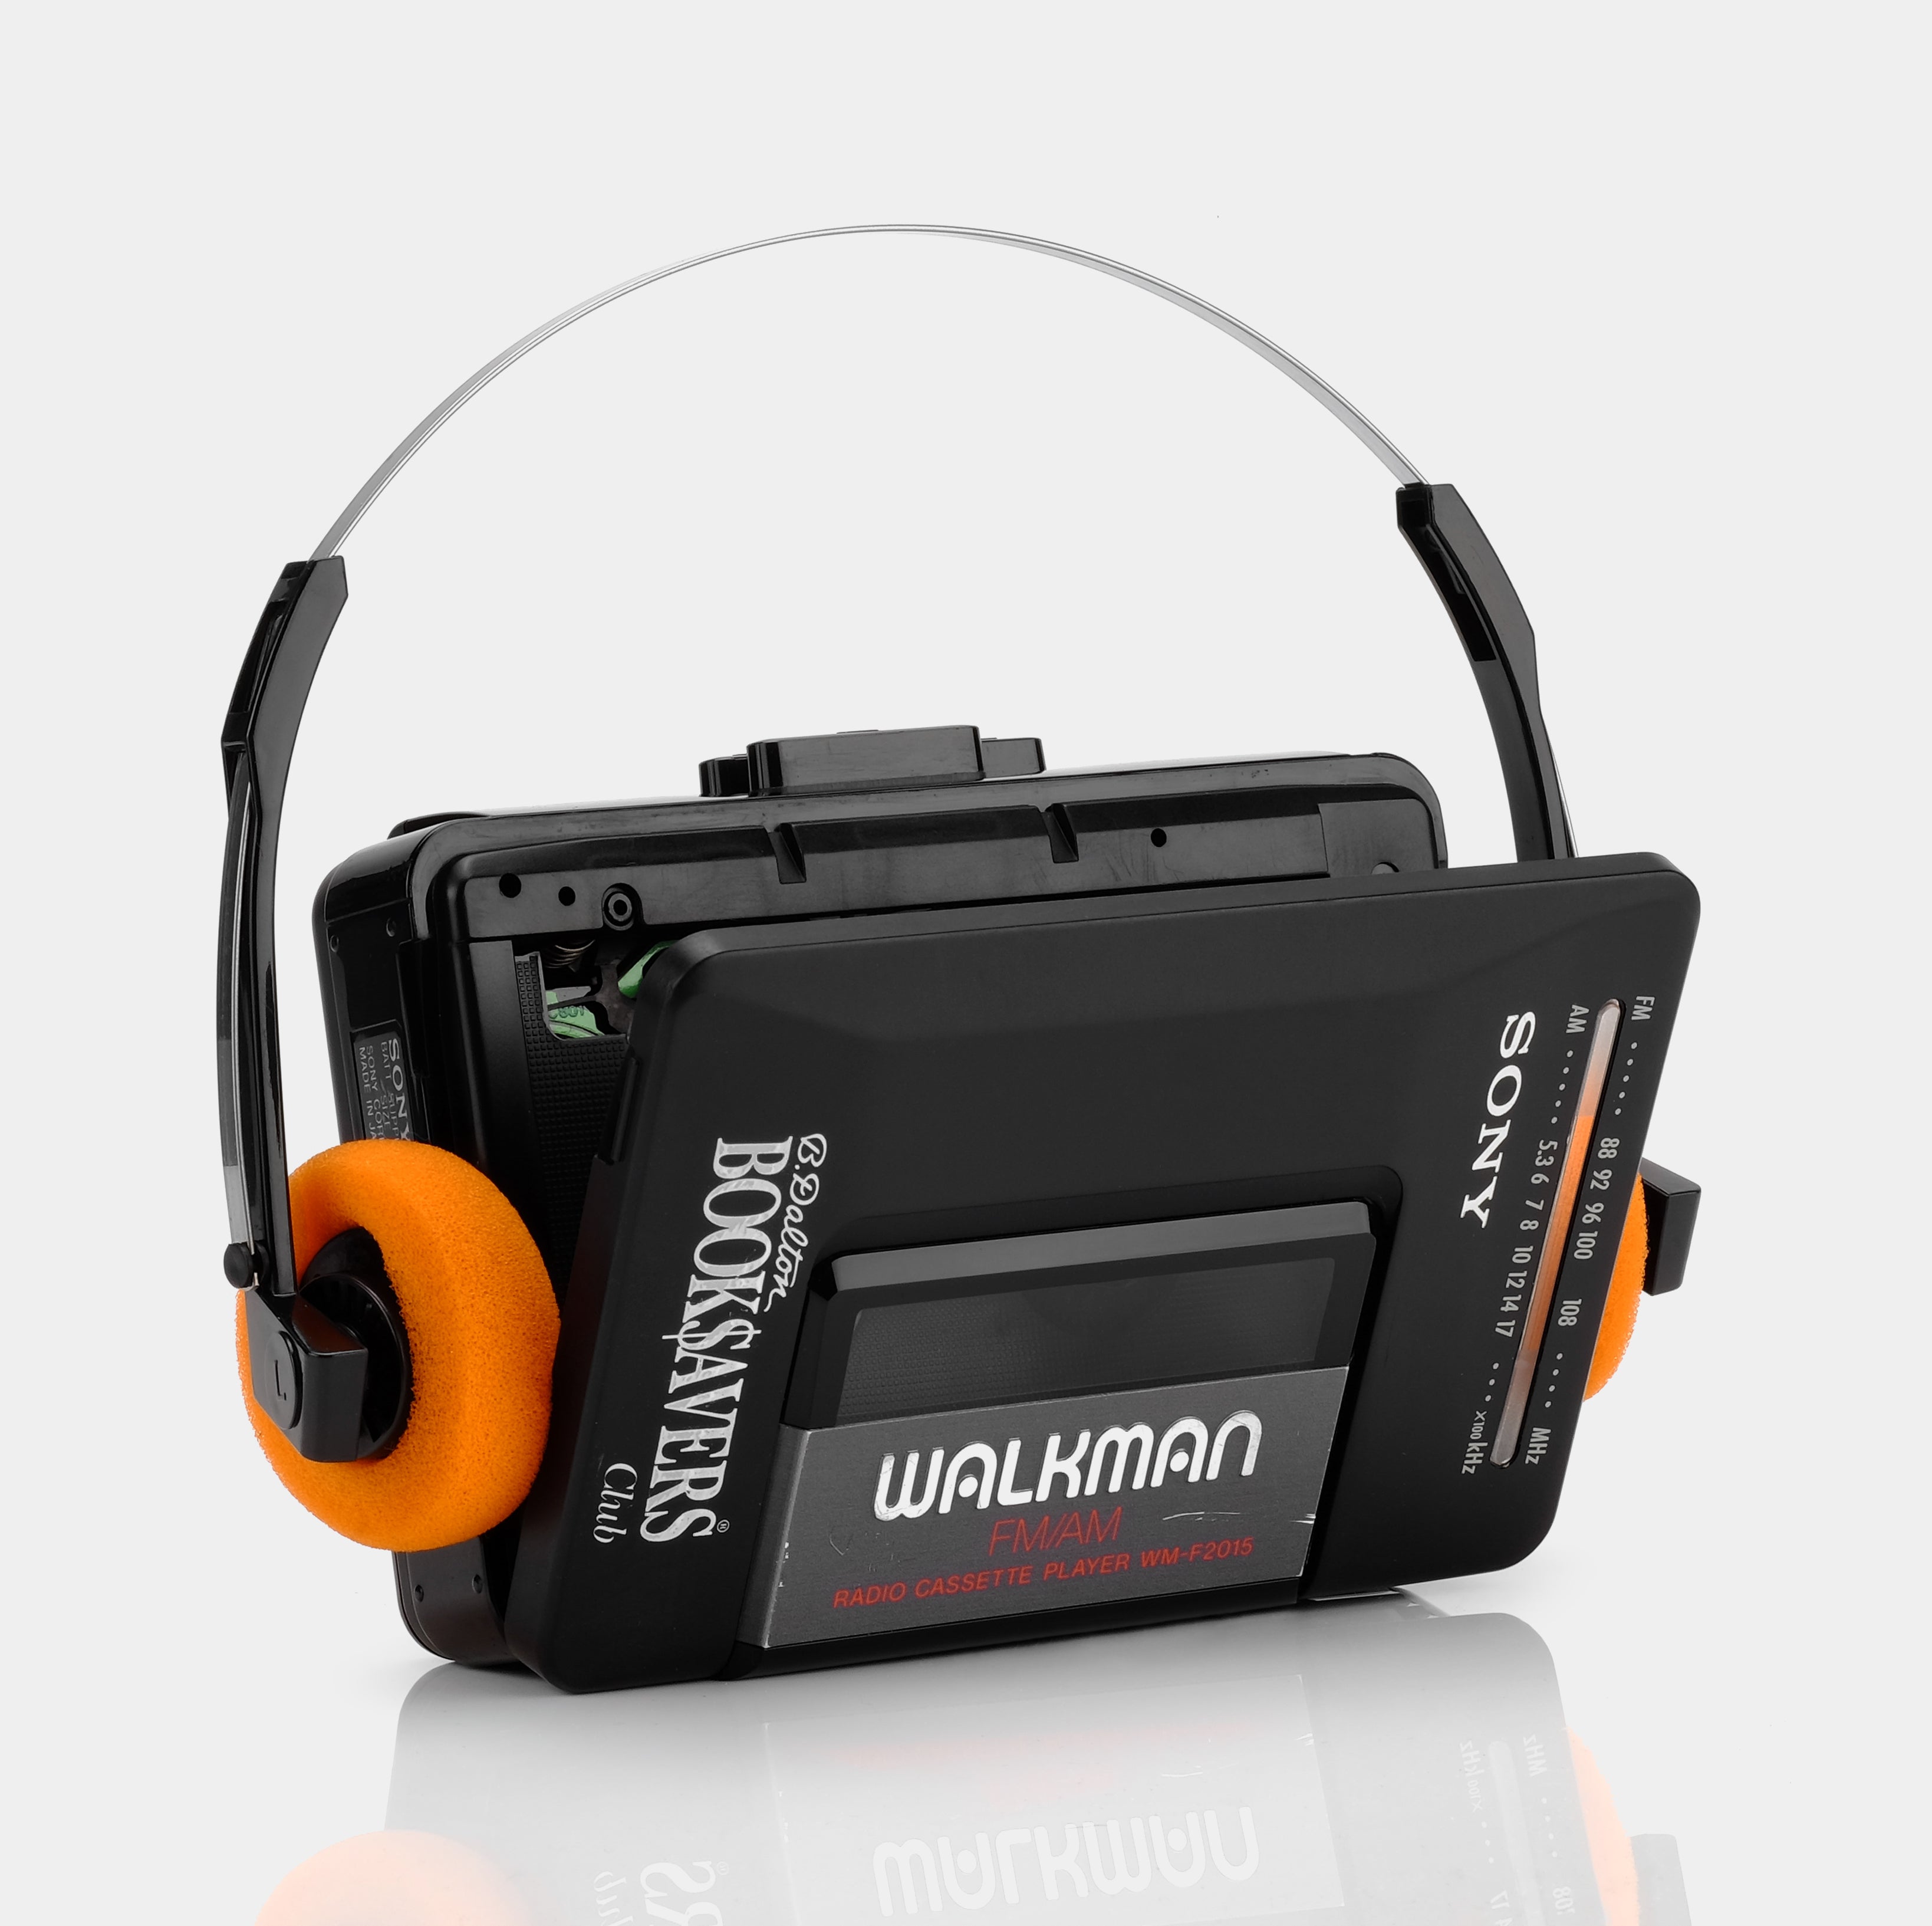 Sony Walkman WM-F2015 B. Dalton Booksavers Club Promo AM/FM Portable Cassette Player